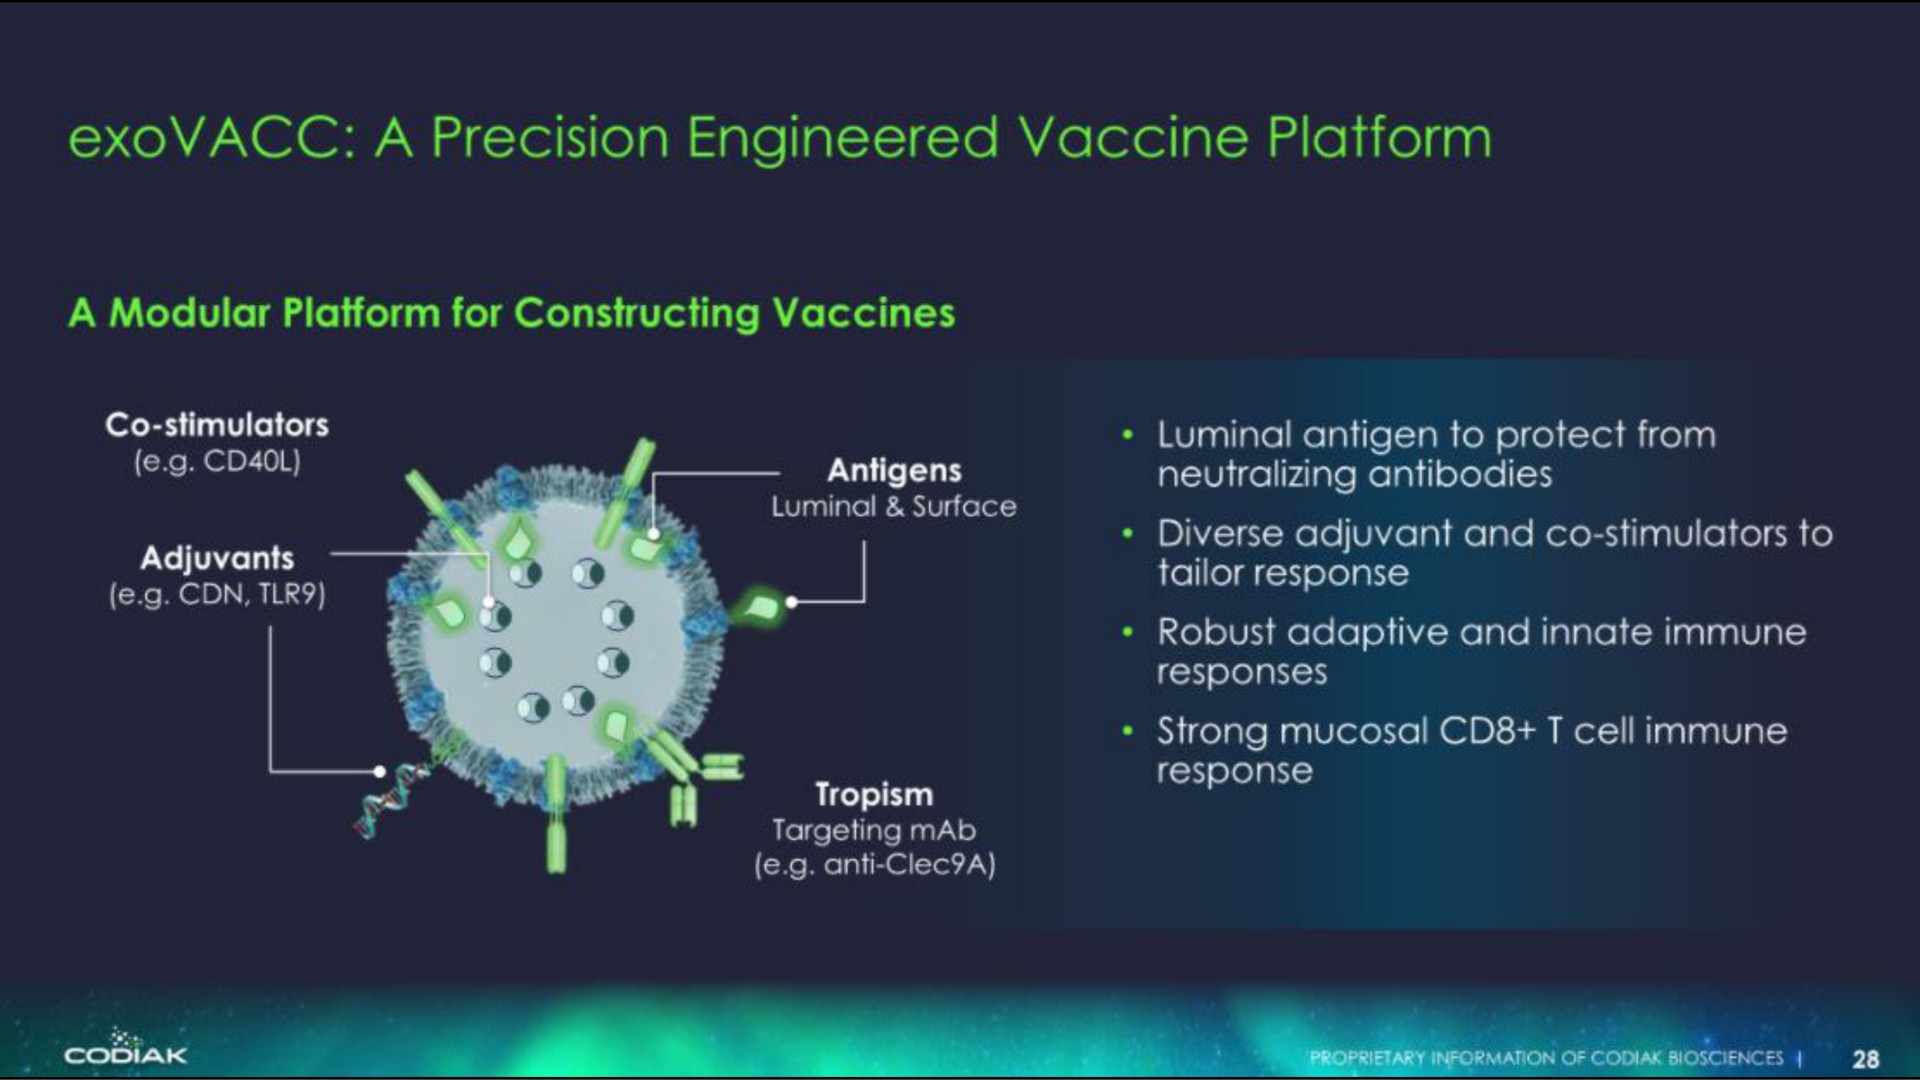 a precision engineered vaccine platform | Codiak